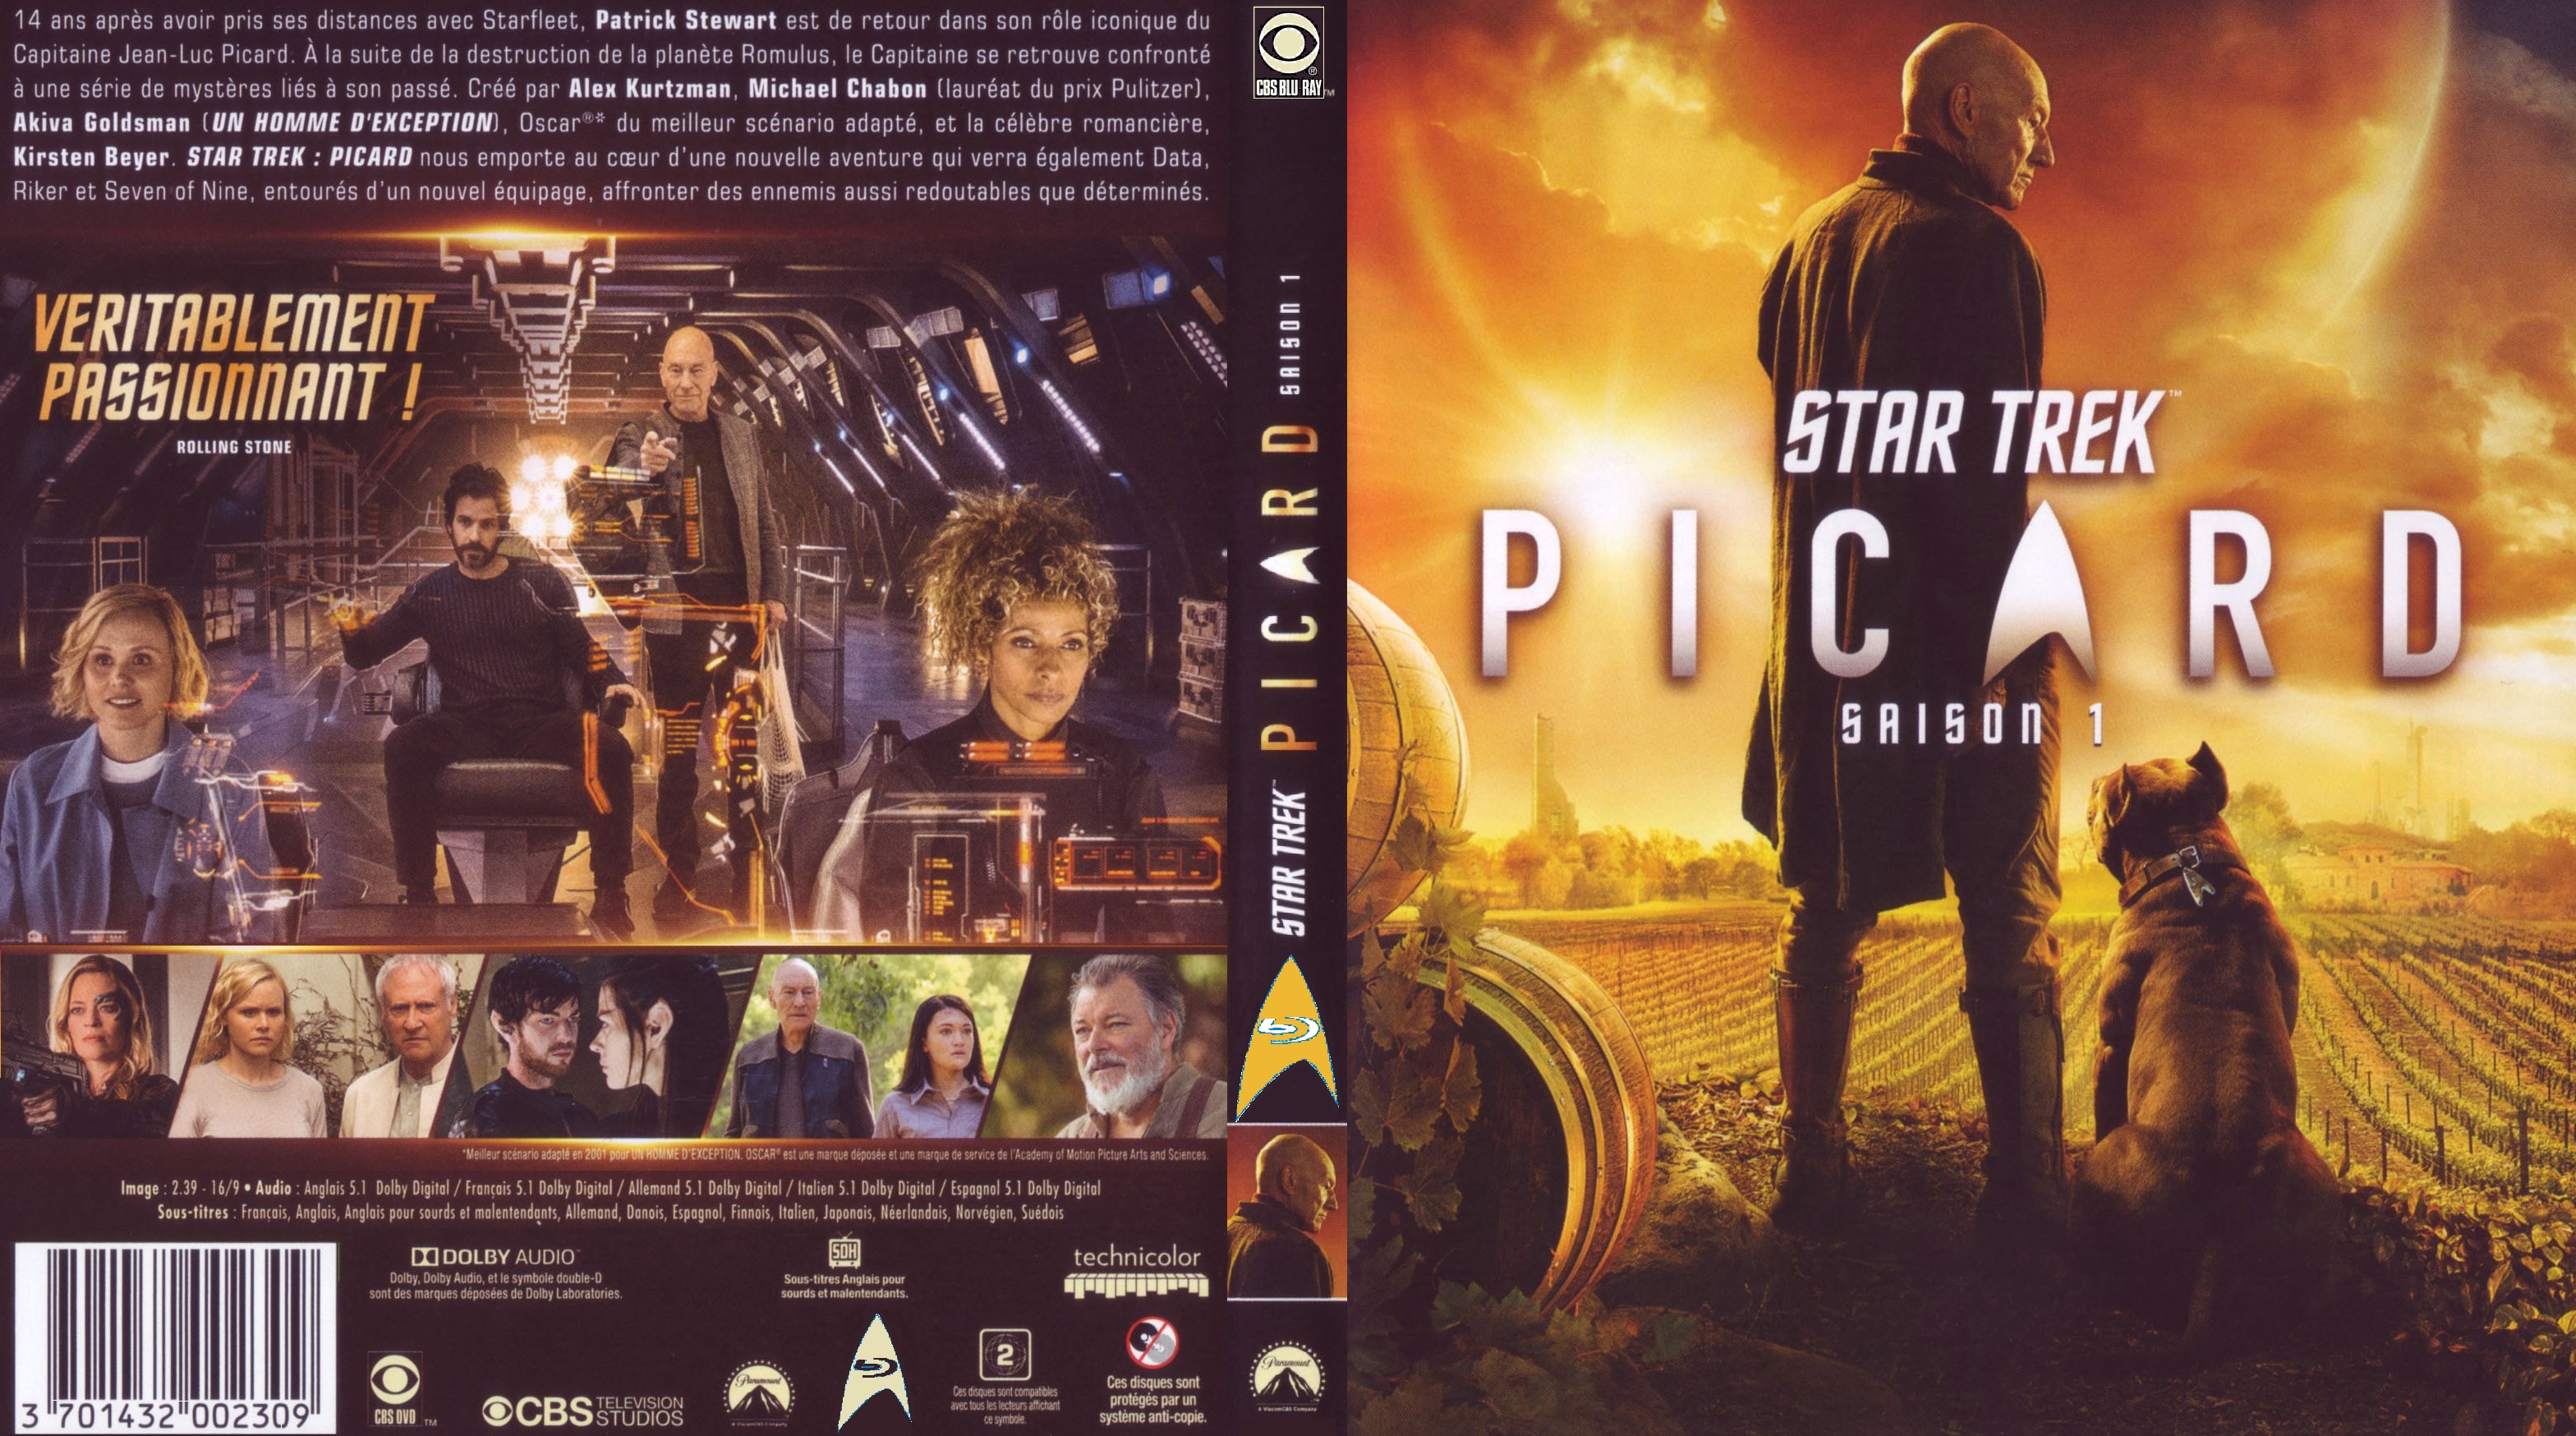 Jaquette DVD Star Trek Picard saison 1 Blu-ray custom